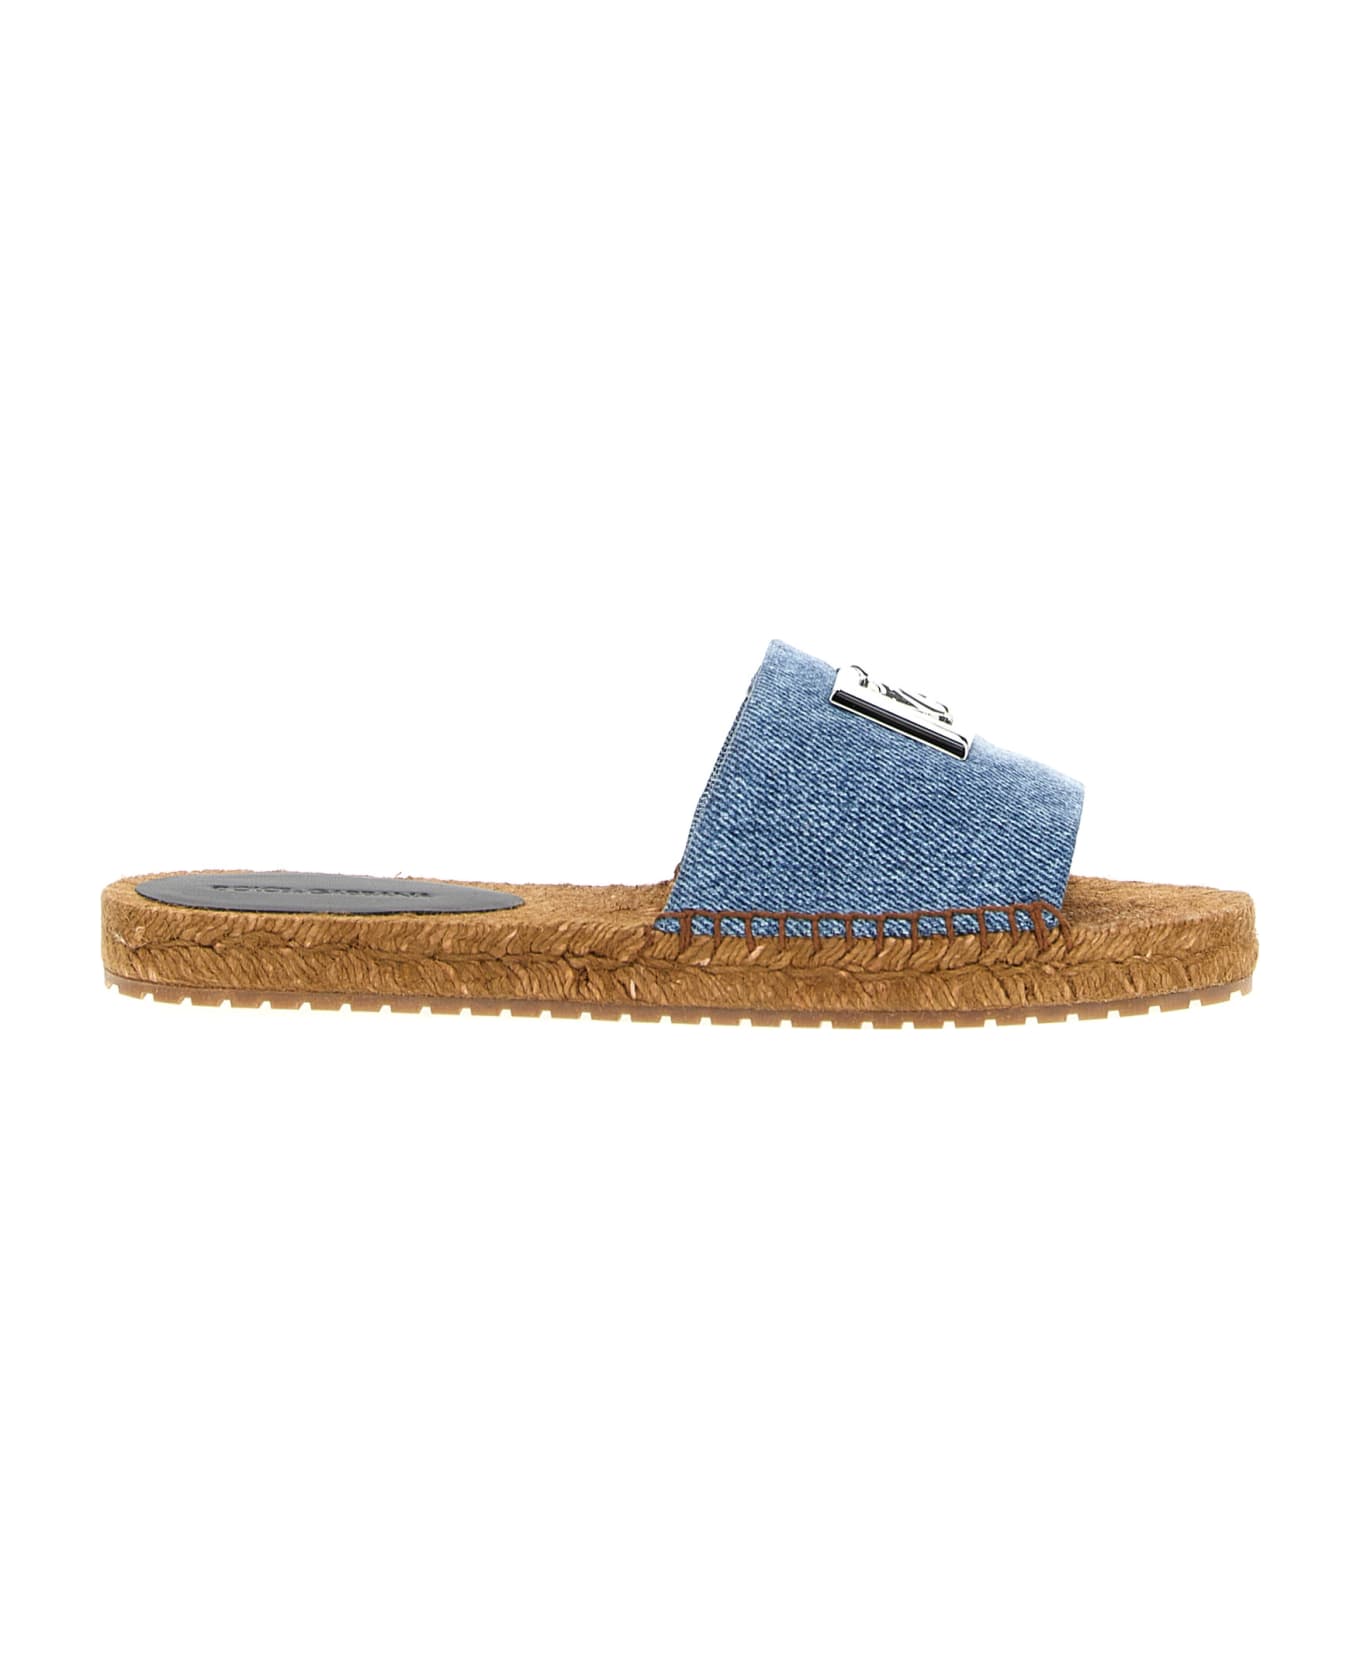 Dolce & Gabbana Espadrilles Sandals - Blue サンダル